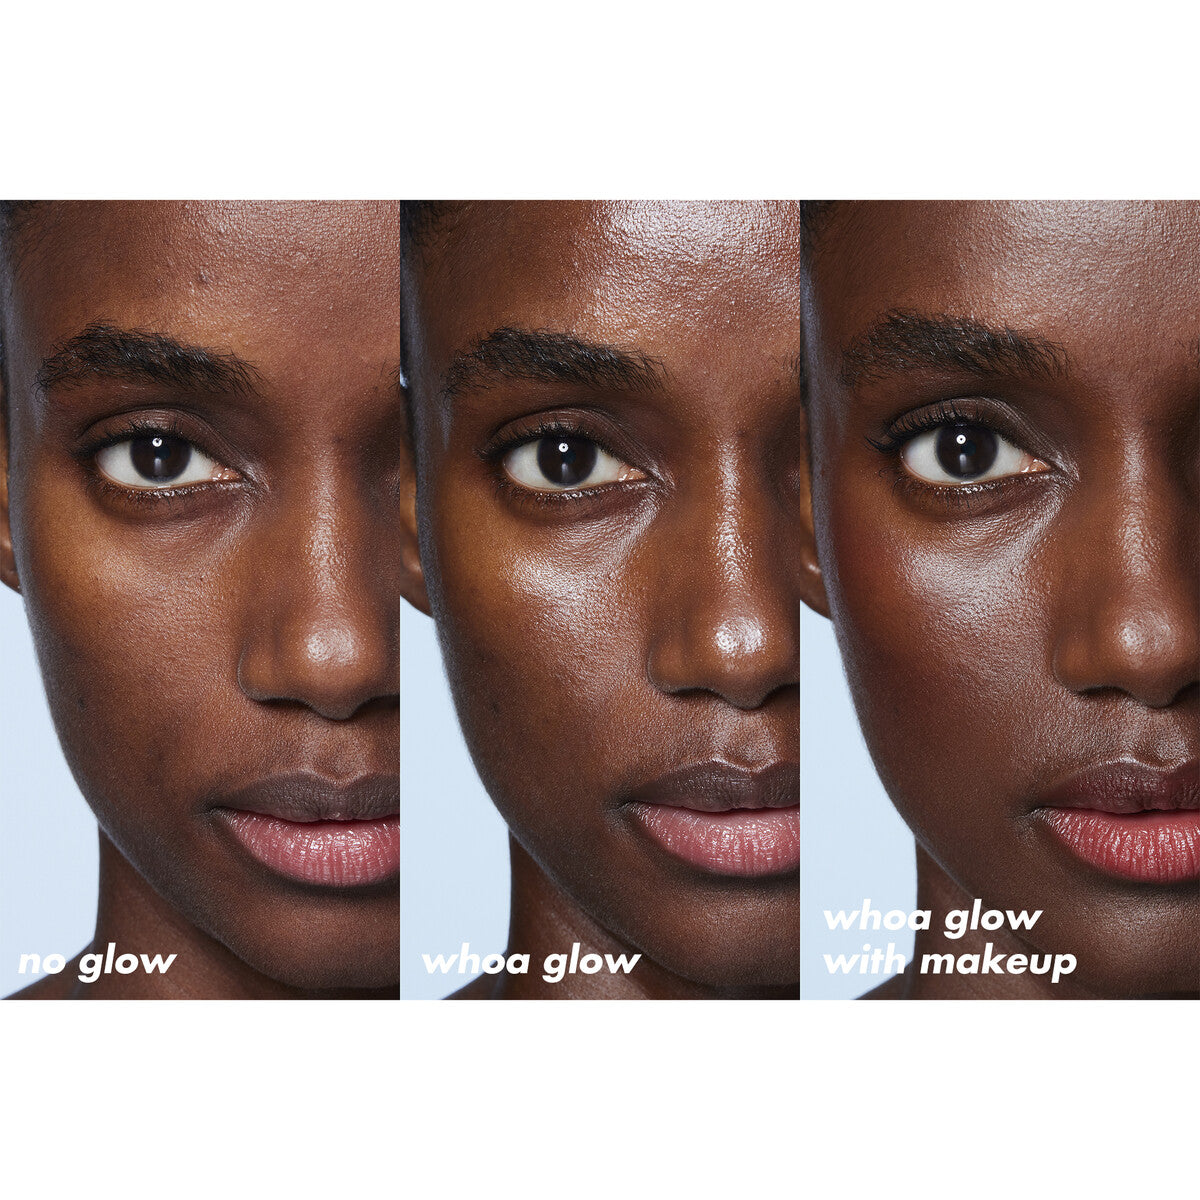 e.l.f. Skin Suntouchable! Whoa Glow SPF 30 Sun Protection + Makeup Primer 50 ml | Sunbeam